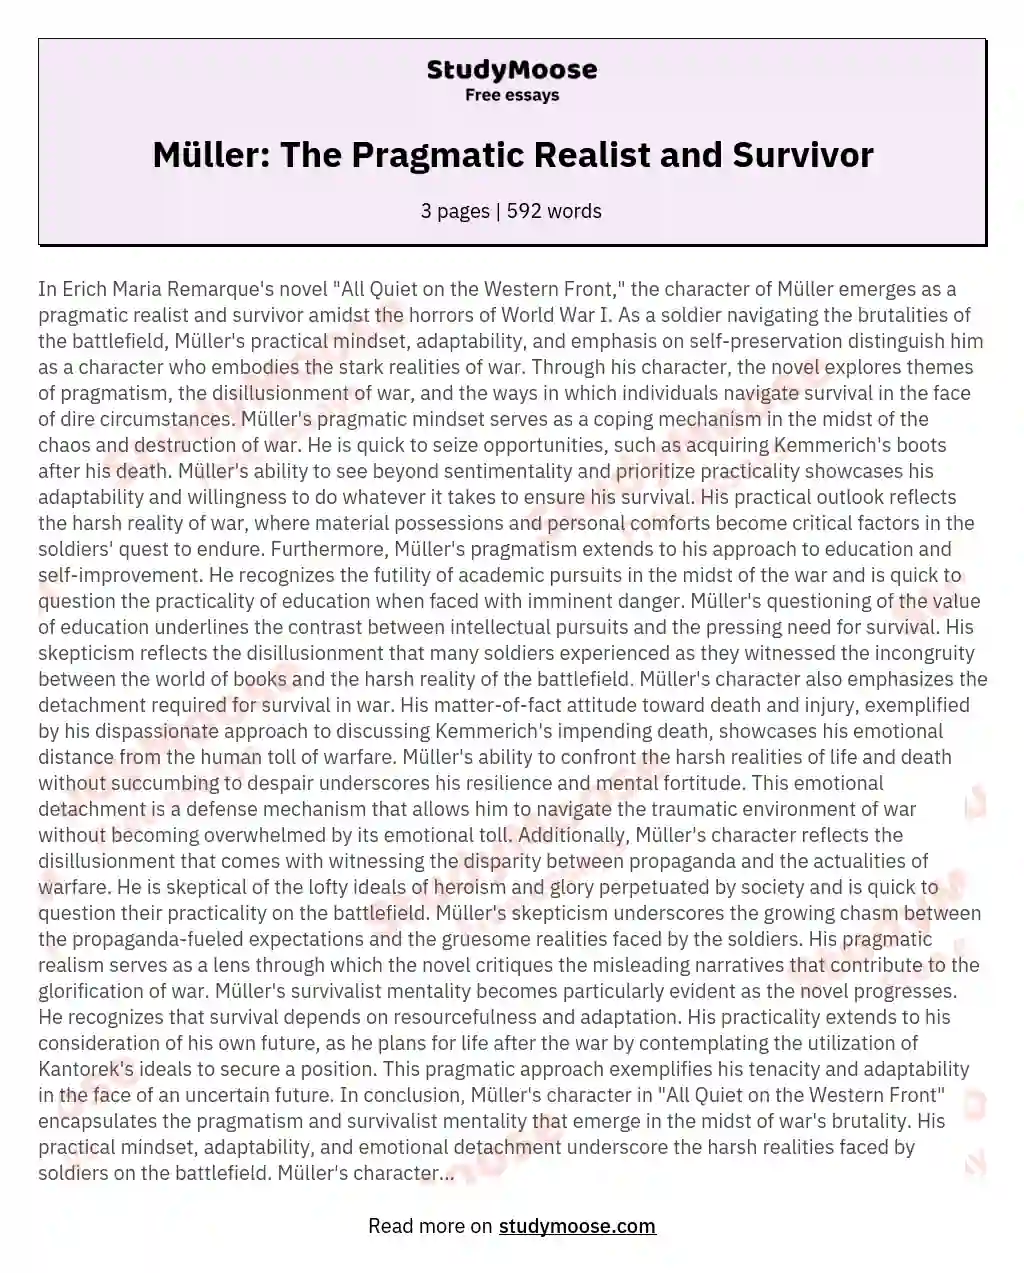 Müller: The Pragmatic Realist and Survivor essay